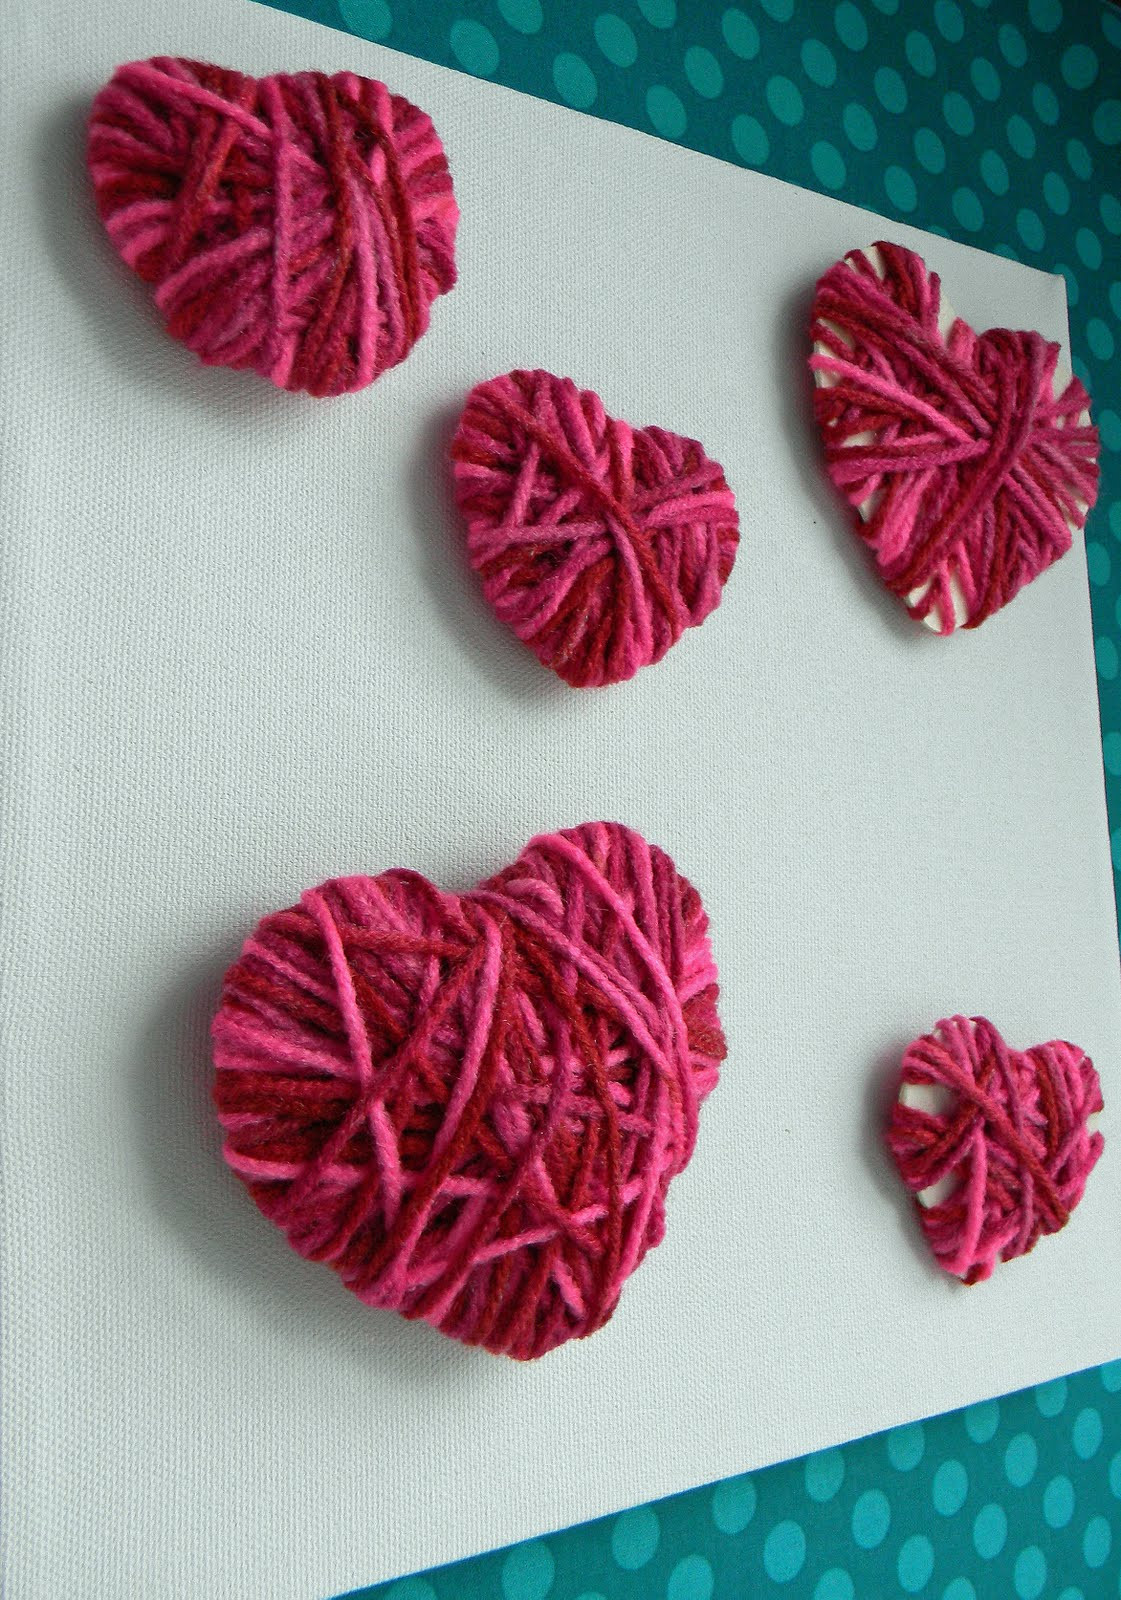 Valentine Crafts For Preschoolers Pinterest
 Valentine’s Day crafts with the kids